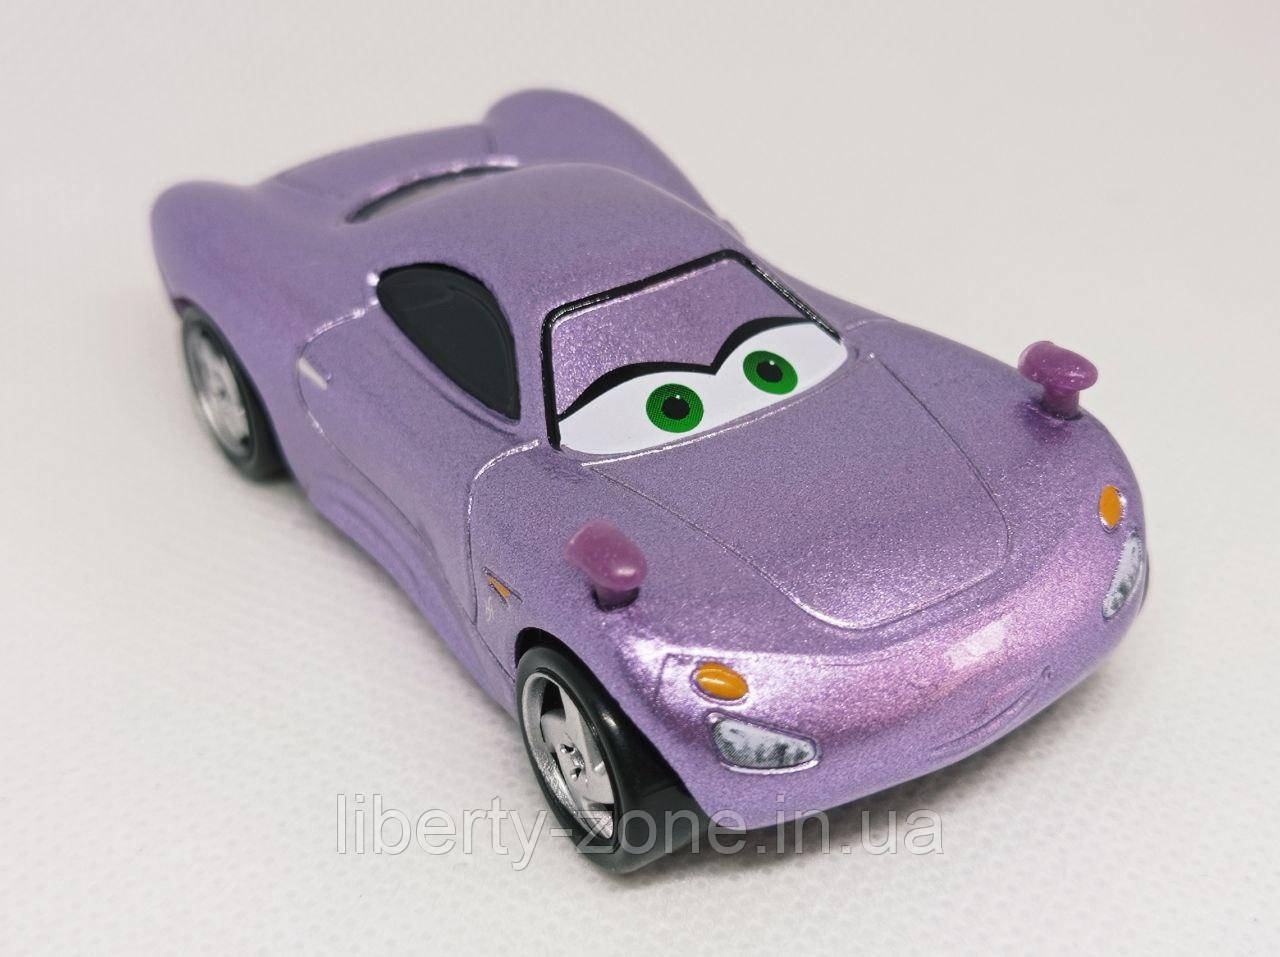 Тачки 2: Холлі (Cars 2: Holley Shiftwell) / Холлі ДеЛюкс / Disney Pixar Cars Secret Agents